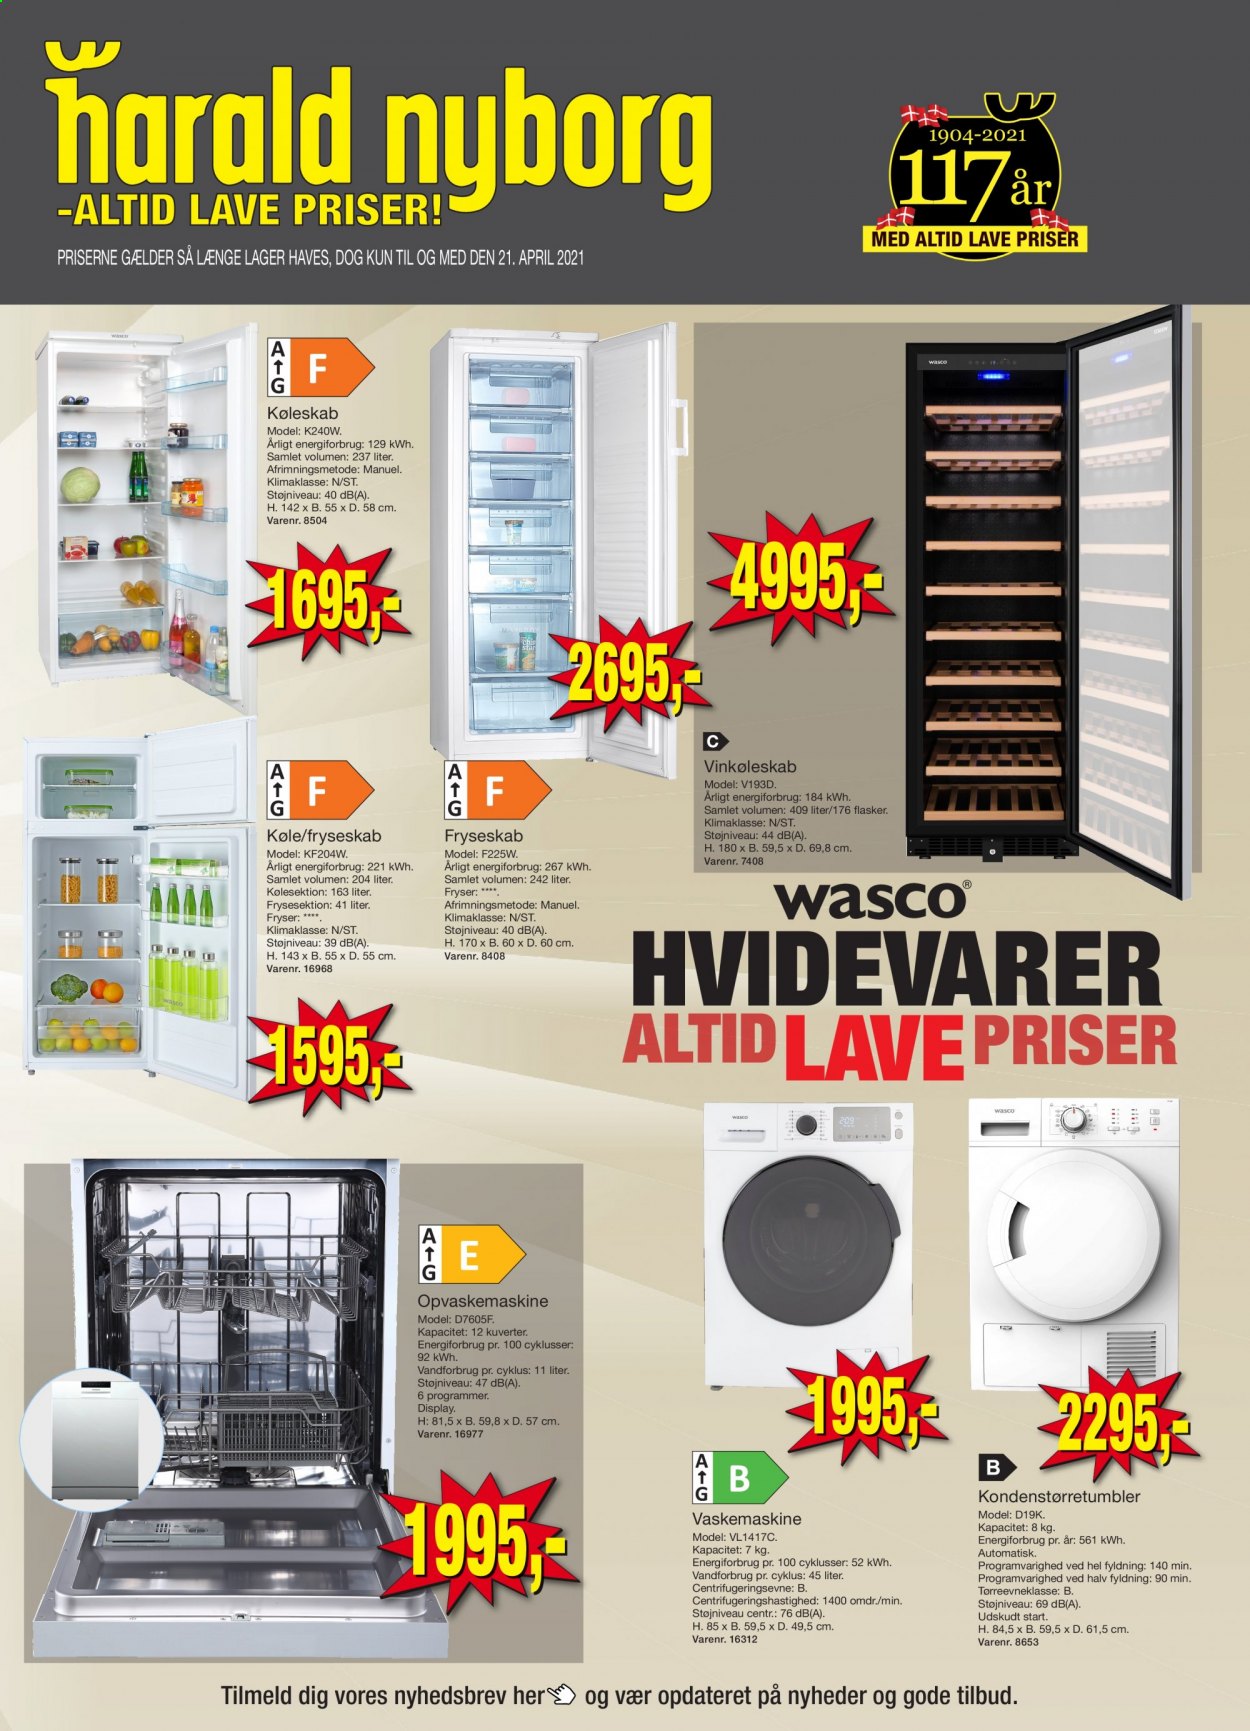 thumbnail - Harald Nyborg tilbud  - 16.4.2021 - 21.4.2021 - tilbudsprodukter - fryser, køleskab, vinkøleskab, opvaskemaskine. Side 1.